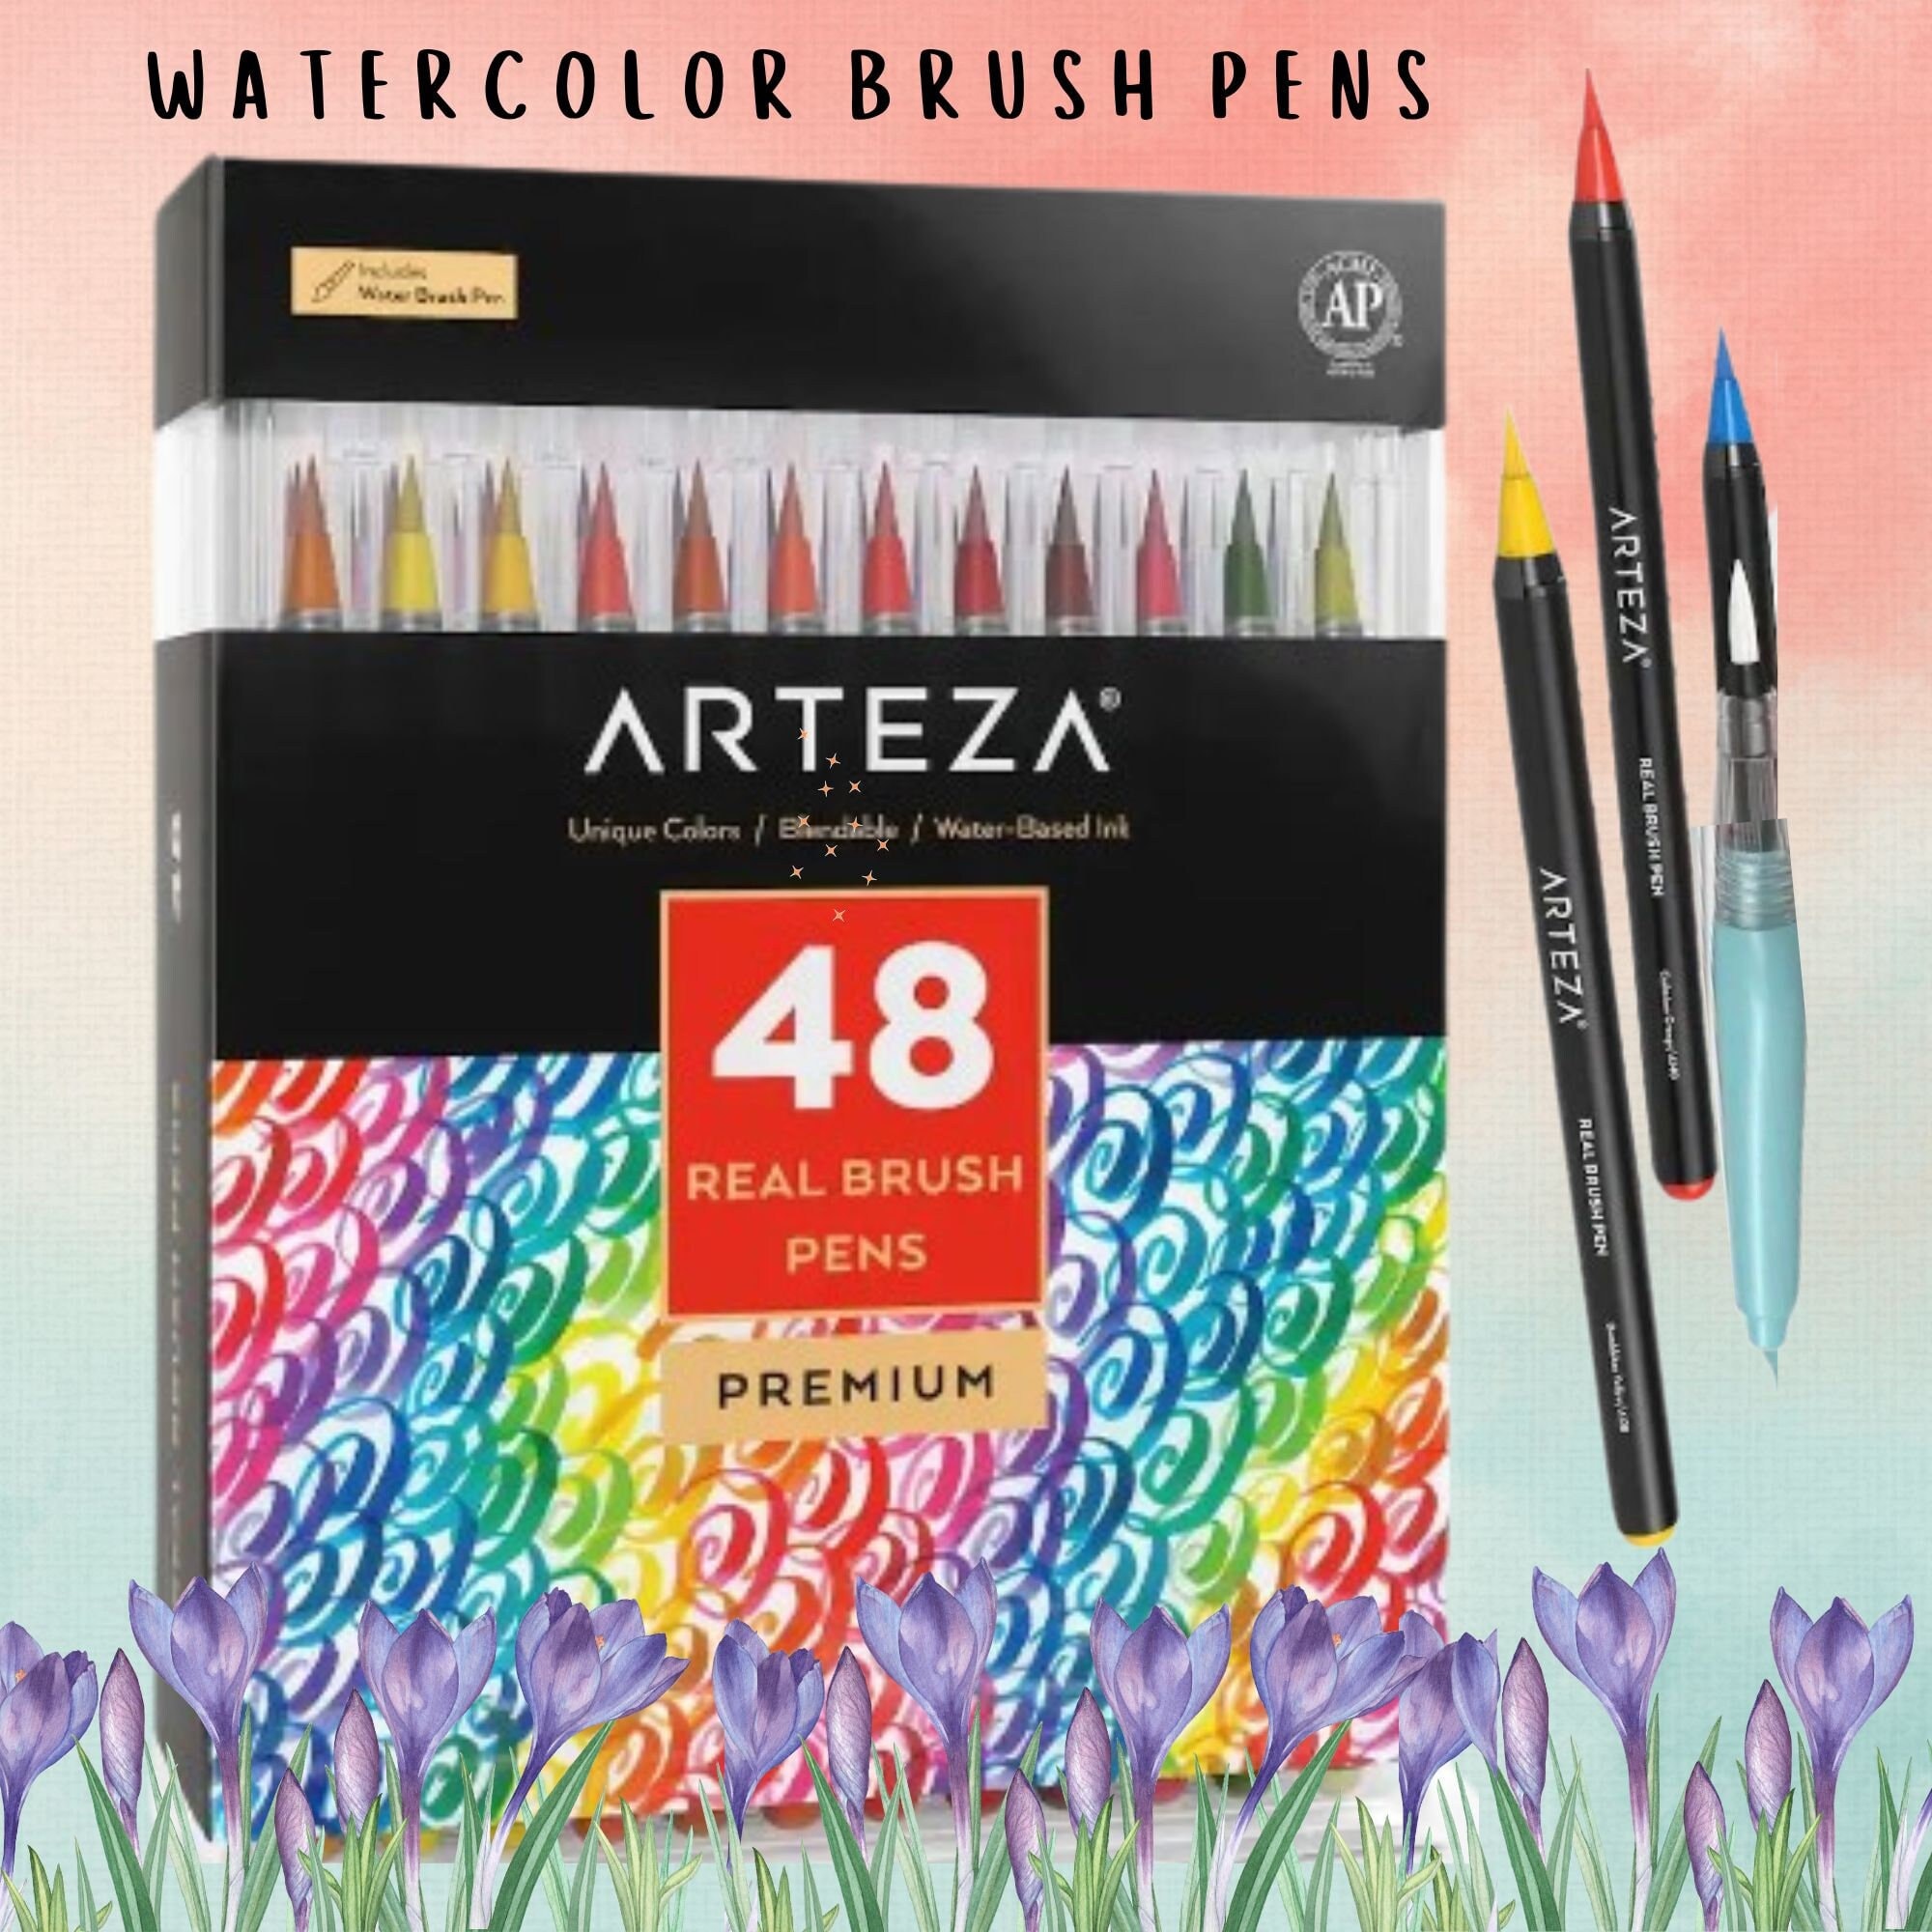 ARTEZA Watercolor Brush Pens 48 Color Real Brush Pens NEW 